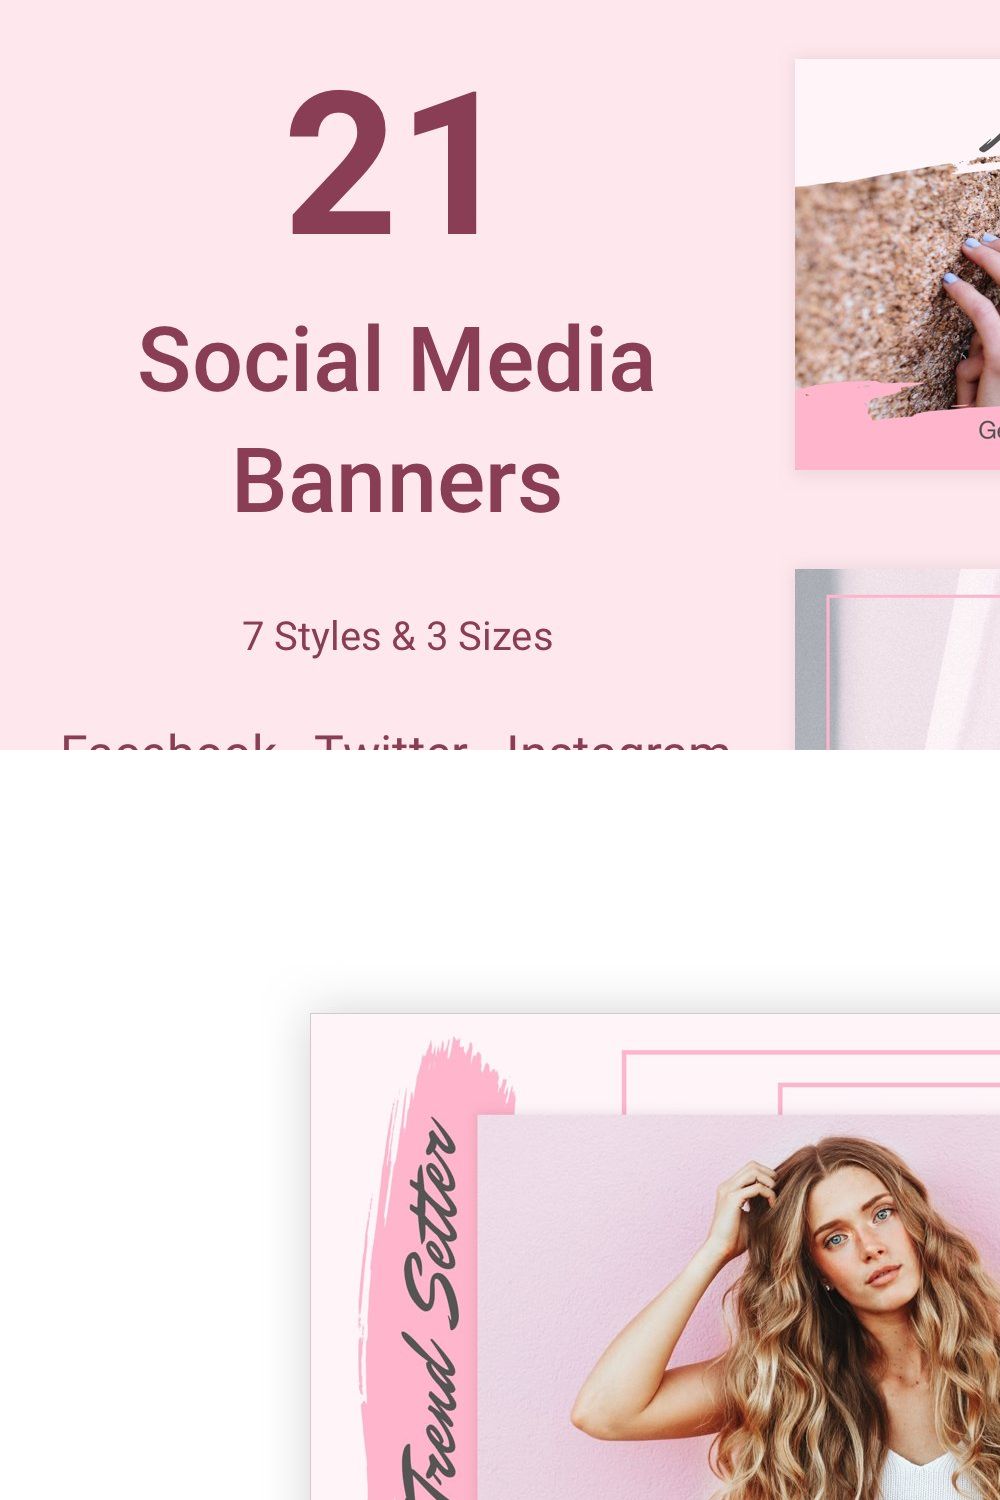 21 Social Media Banners Psd (V-6) pinterest preview image.